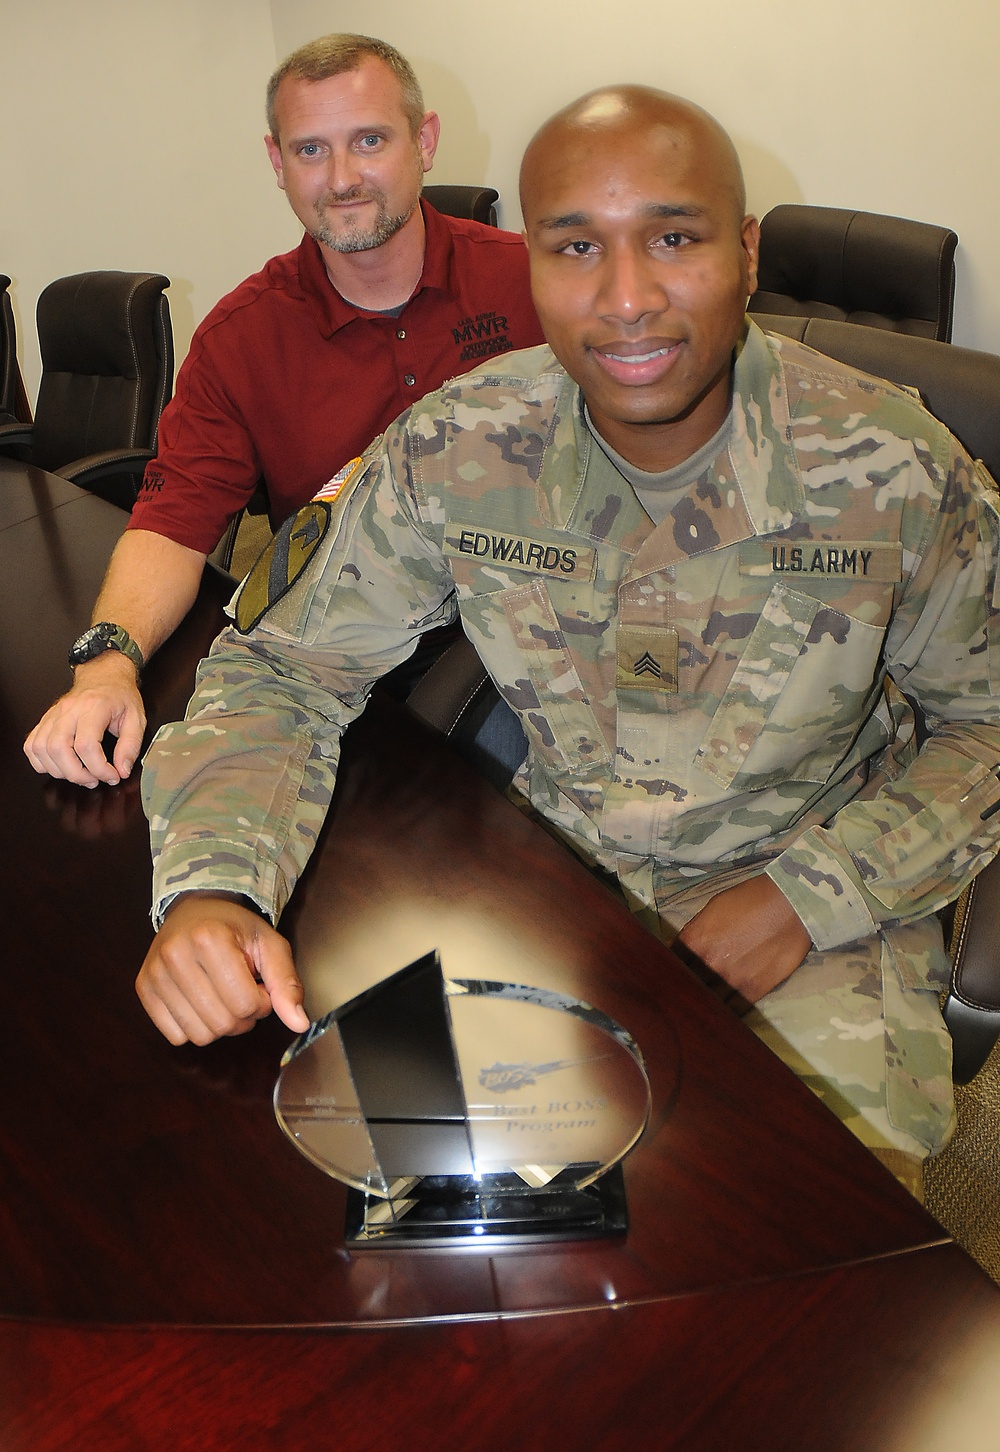 DVIDS - News - Fort Lee BOSS program named best in Army